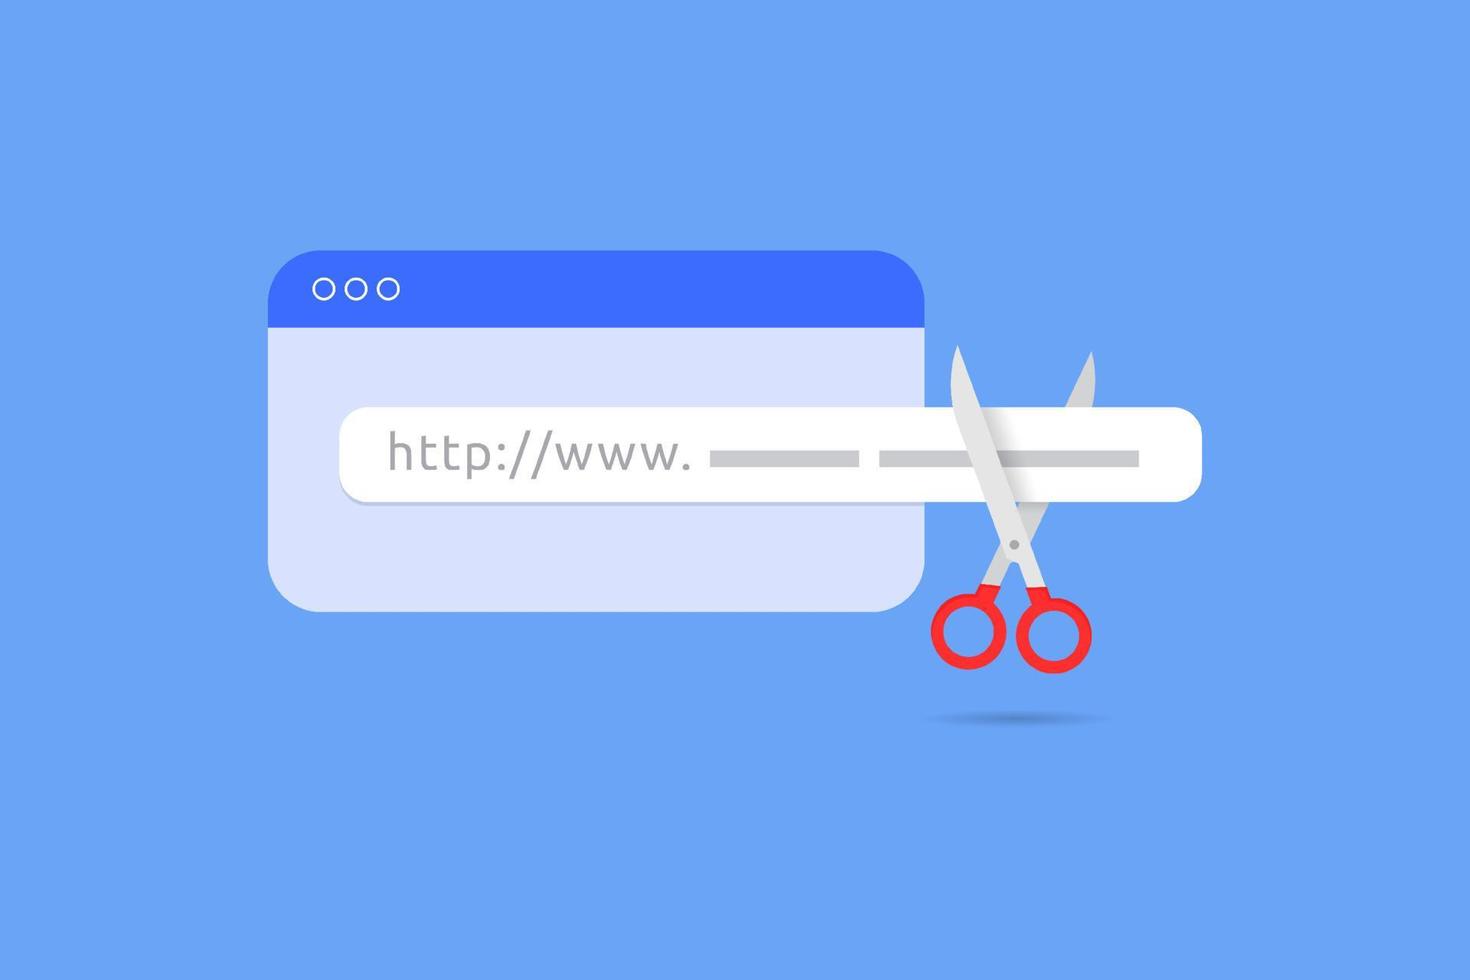 short and custom URLs, url shortener technology and generator, scissor cut an address bar or link to make it shorter vector